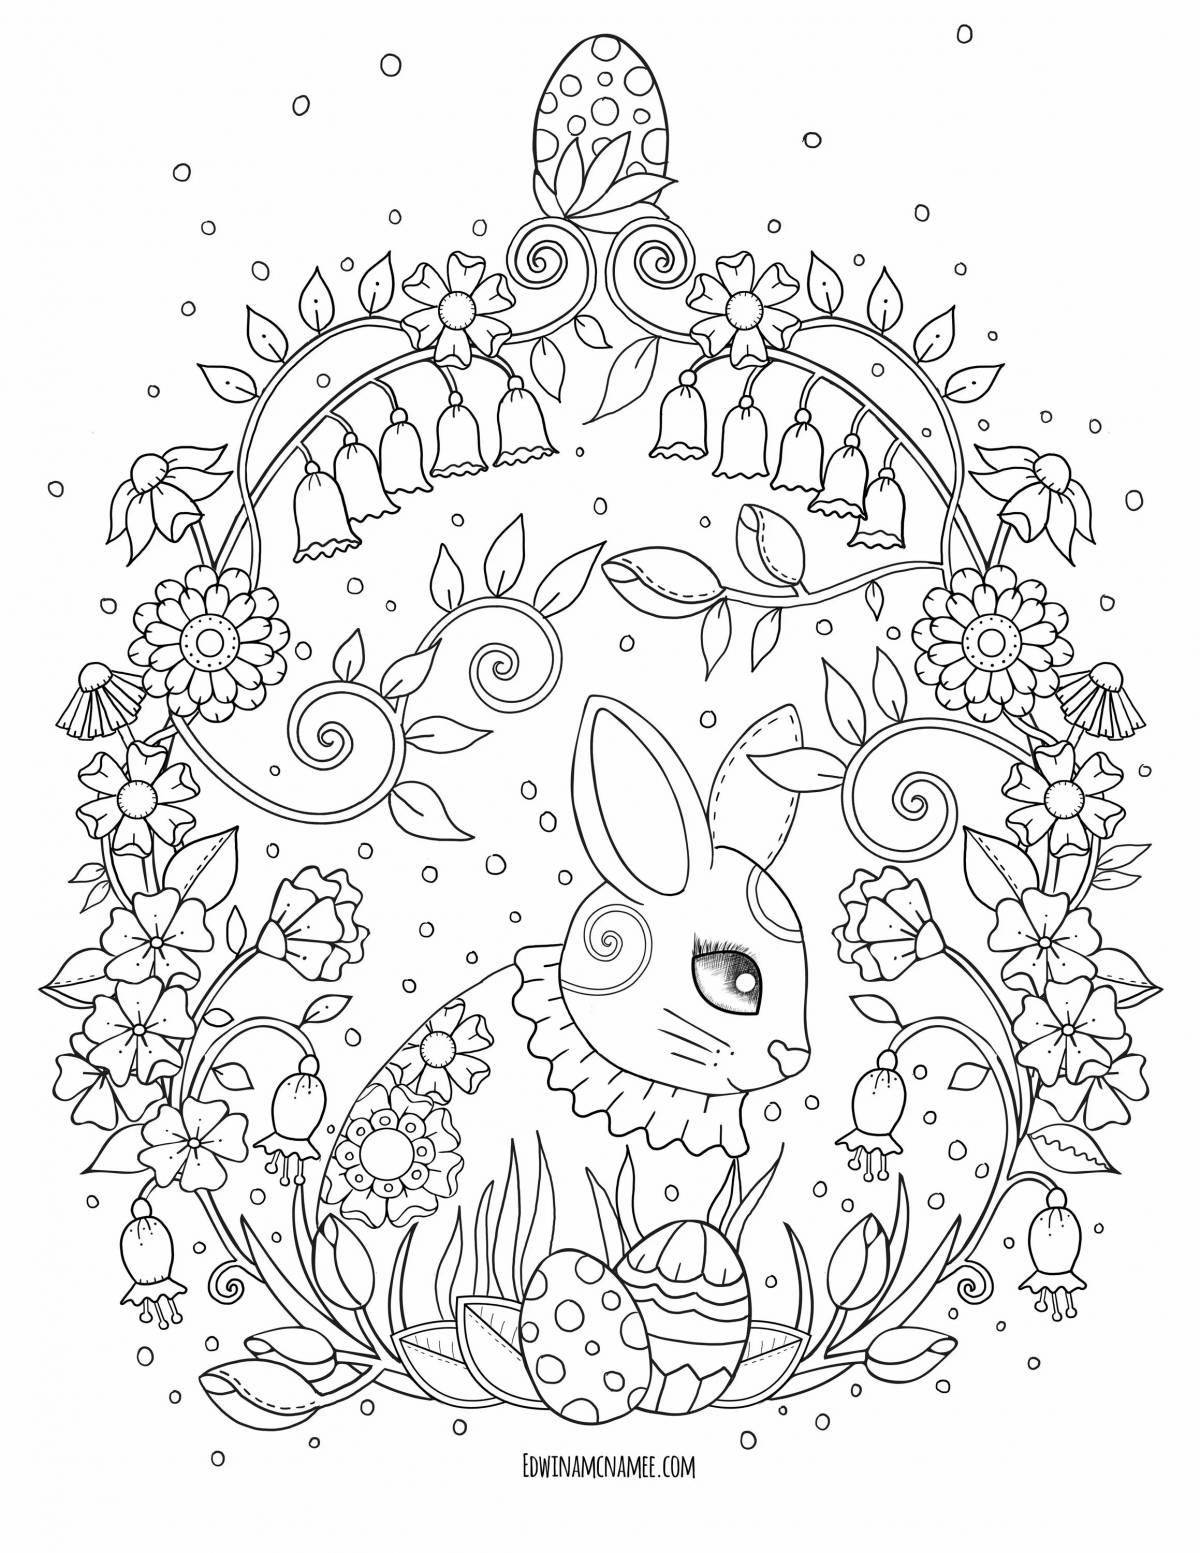 Fun coloring bunny antistress